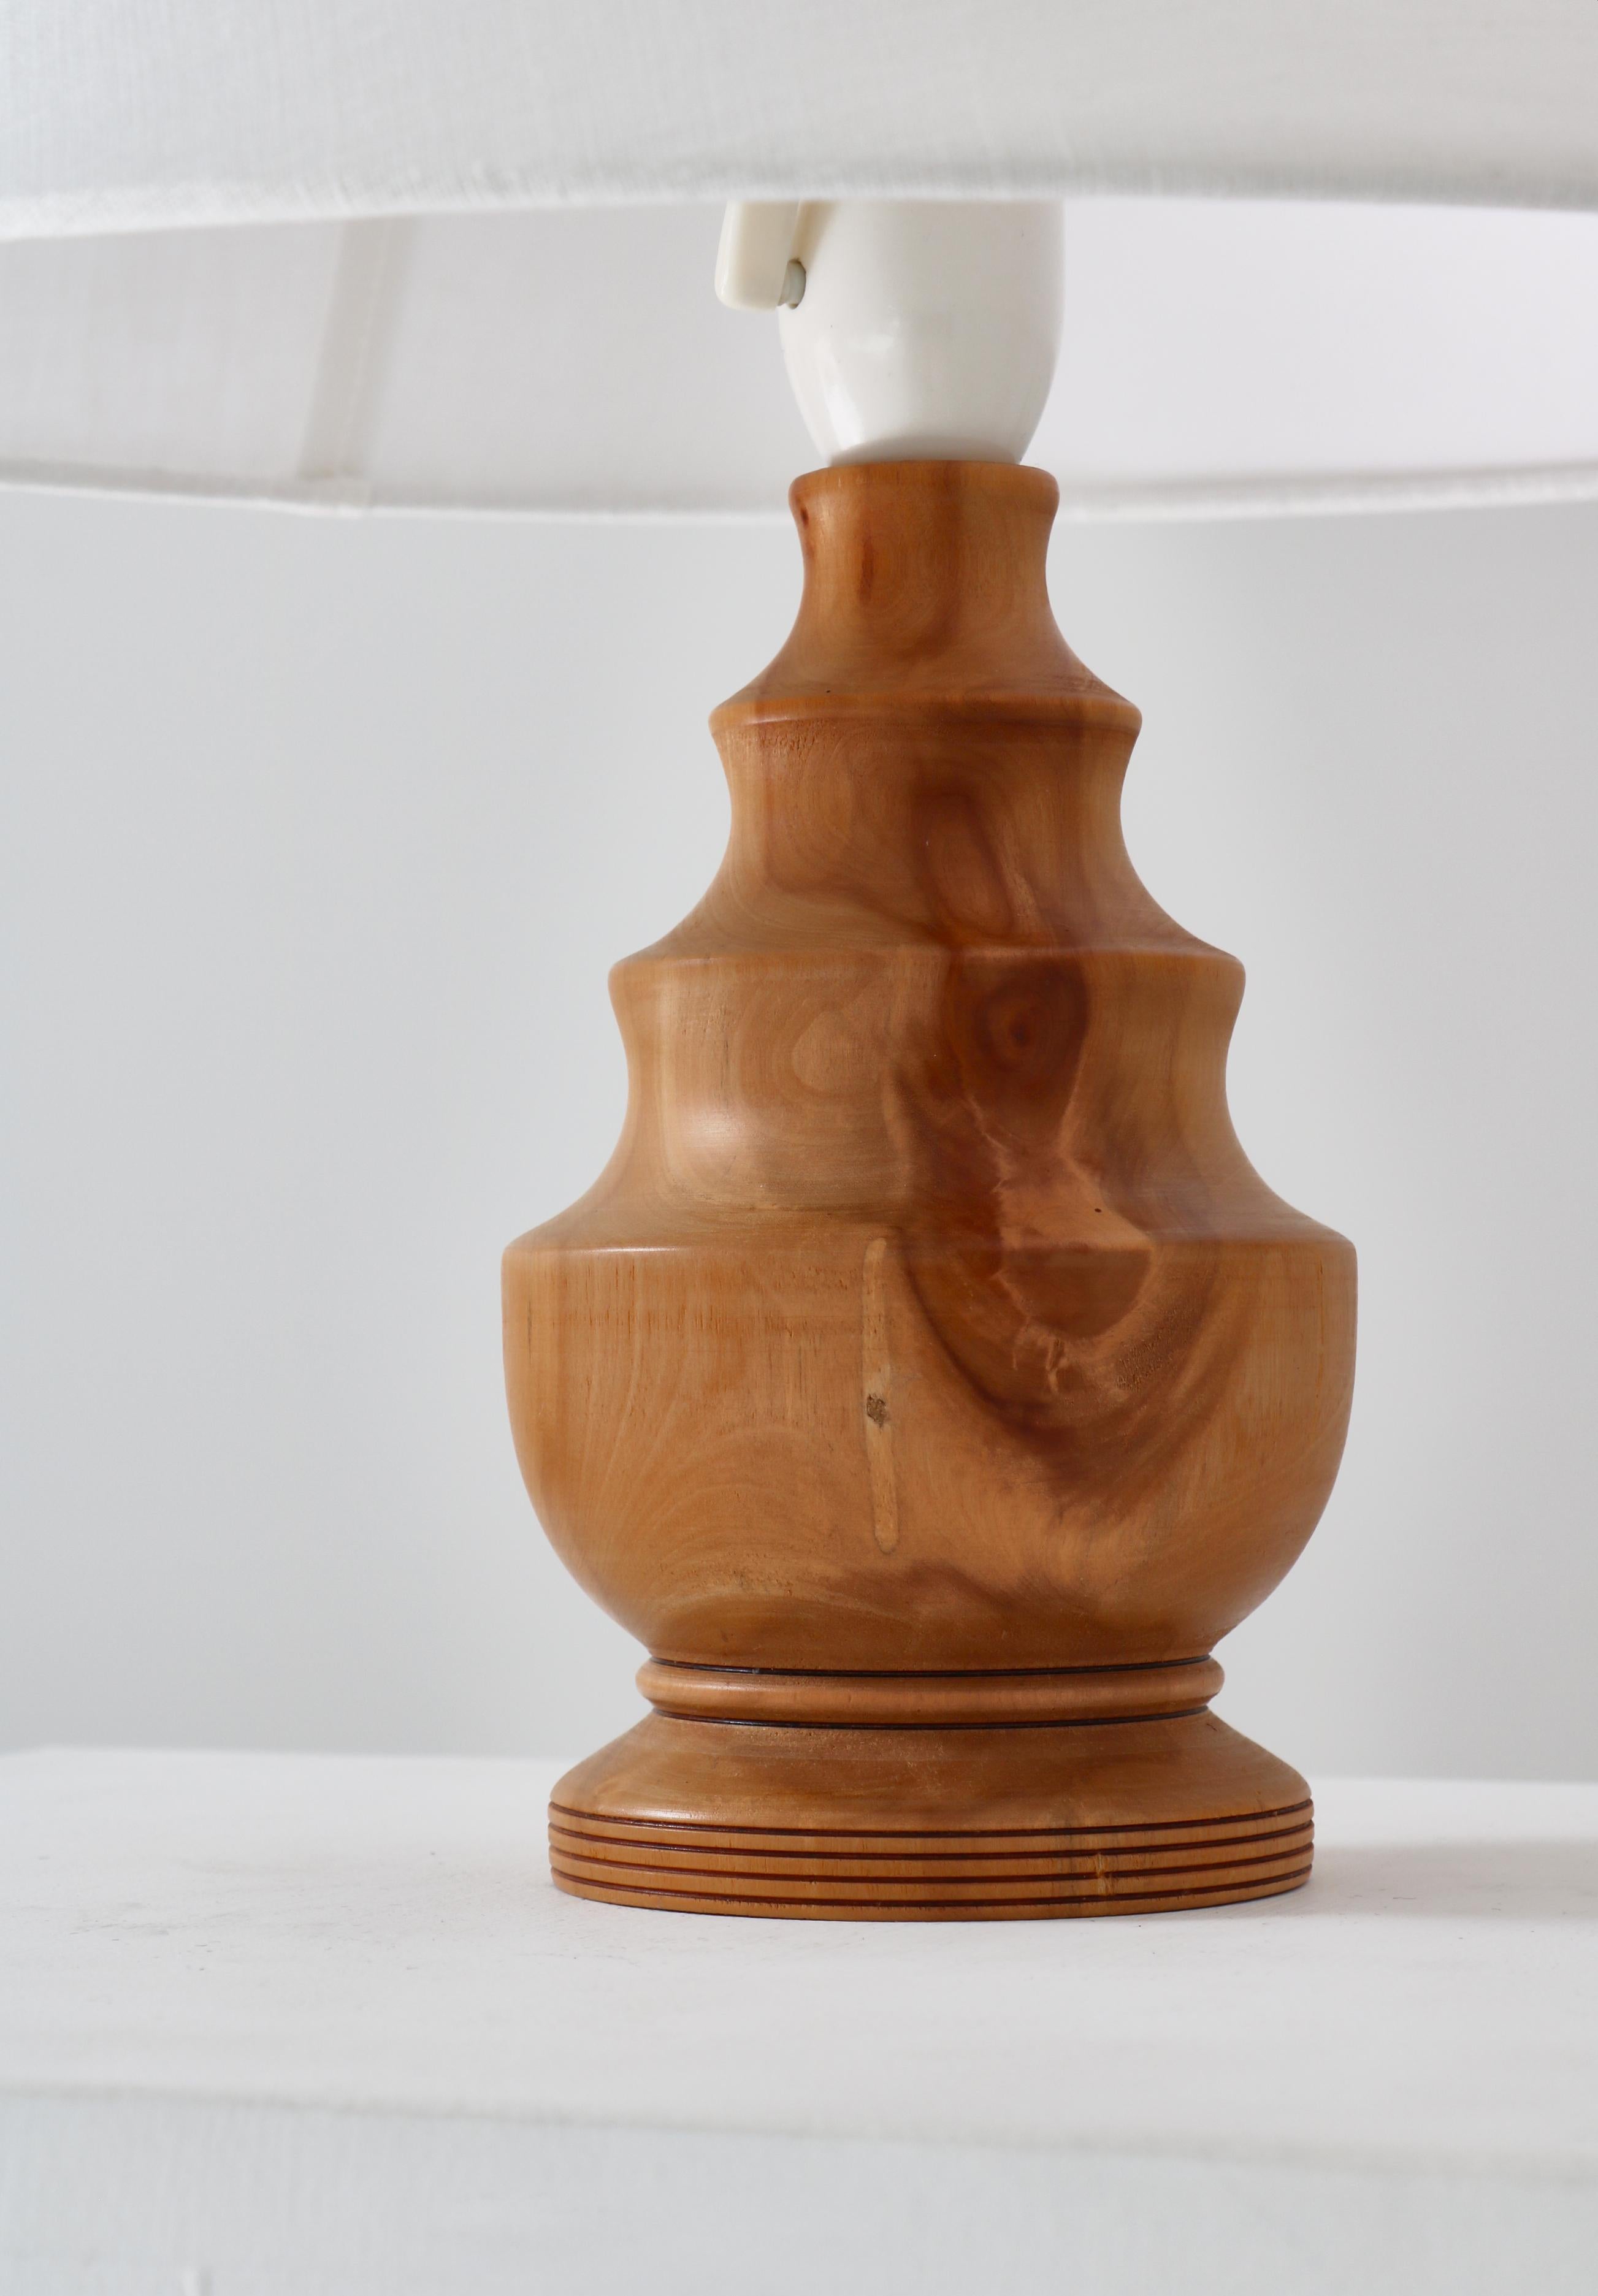 Scandinavian Modern Antique Scandinavian Turned Wooden Table Lamp Handmade in Denmark, 1940s For Sale